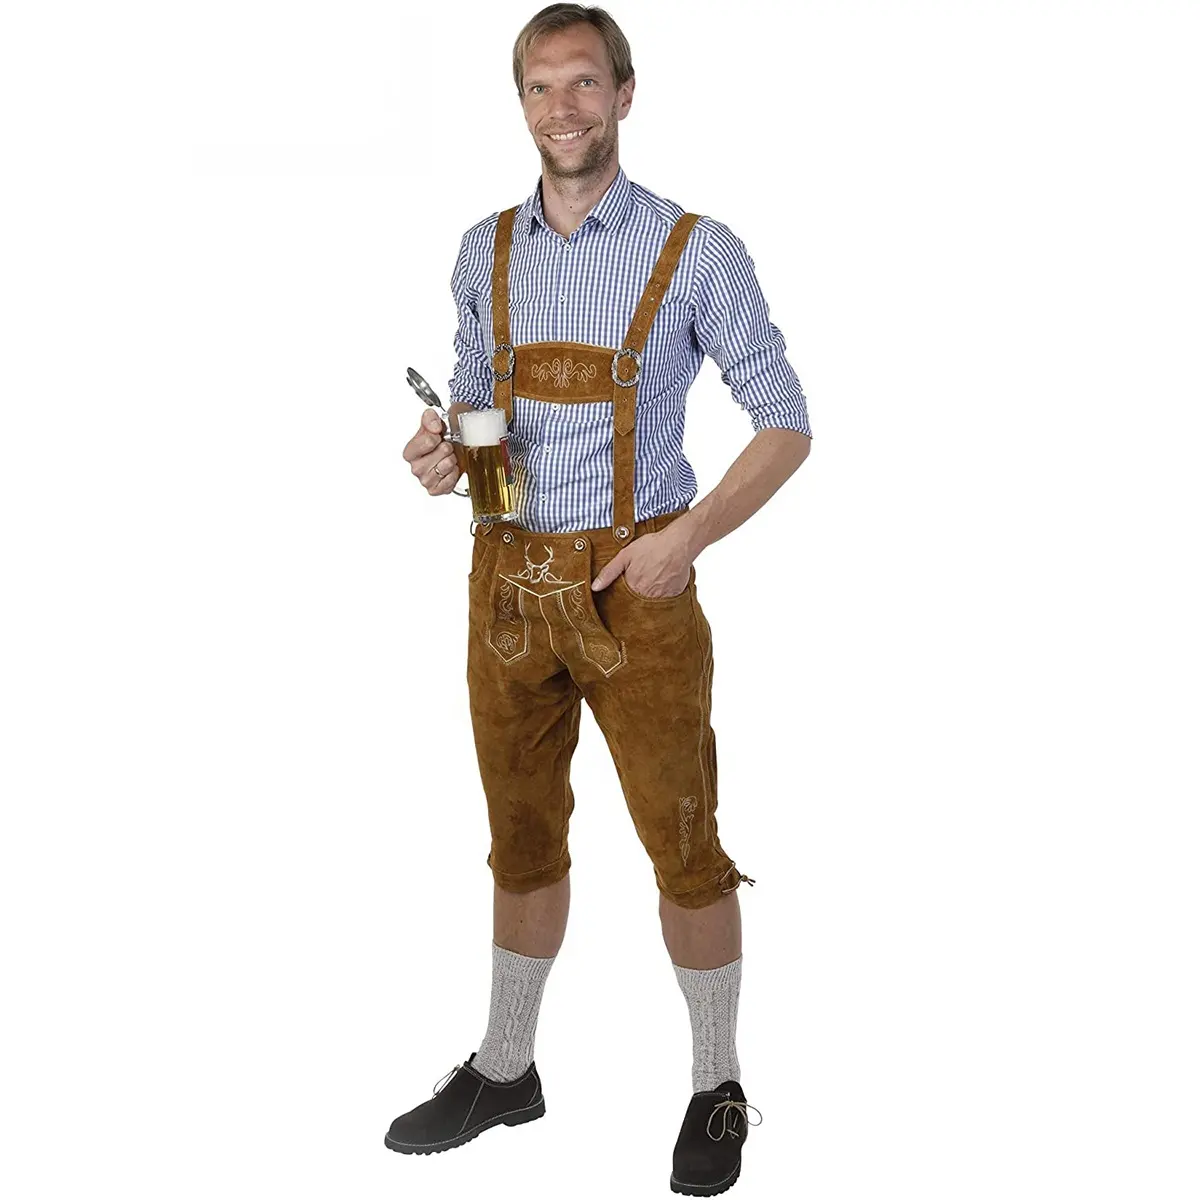 Celana pendek tali lutut lederhosen tradisional celana kulit celana Tradisional digunakan terlihat krem Bavaria Lederhosen Oktoberfest